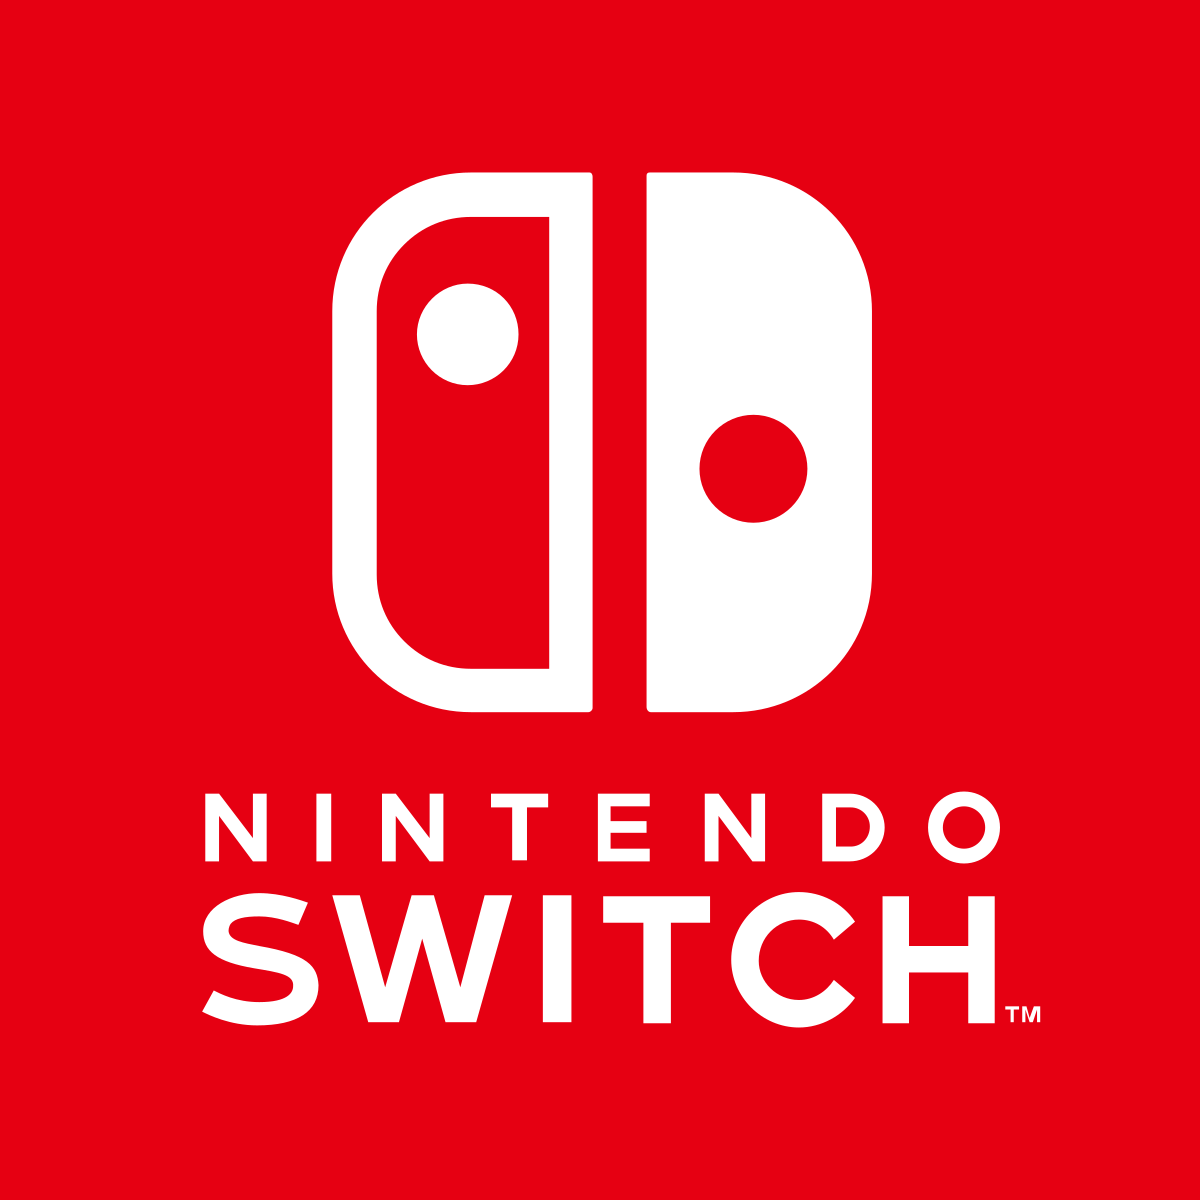 Nintendo Switch   萌娘百科萬物皆可萌的百科全書